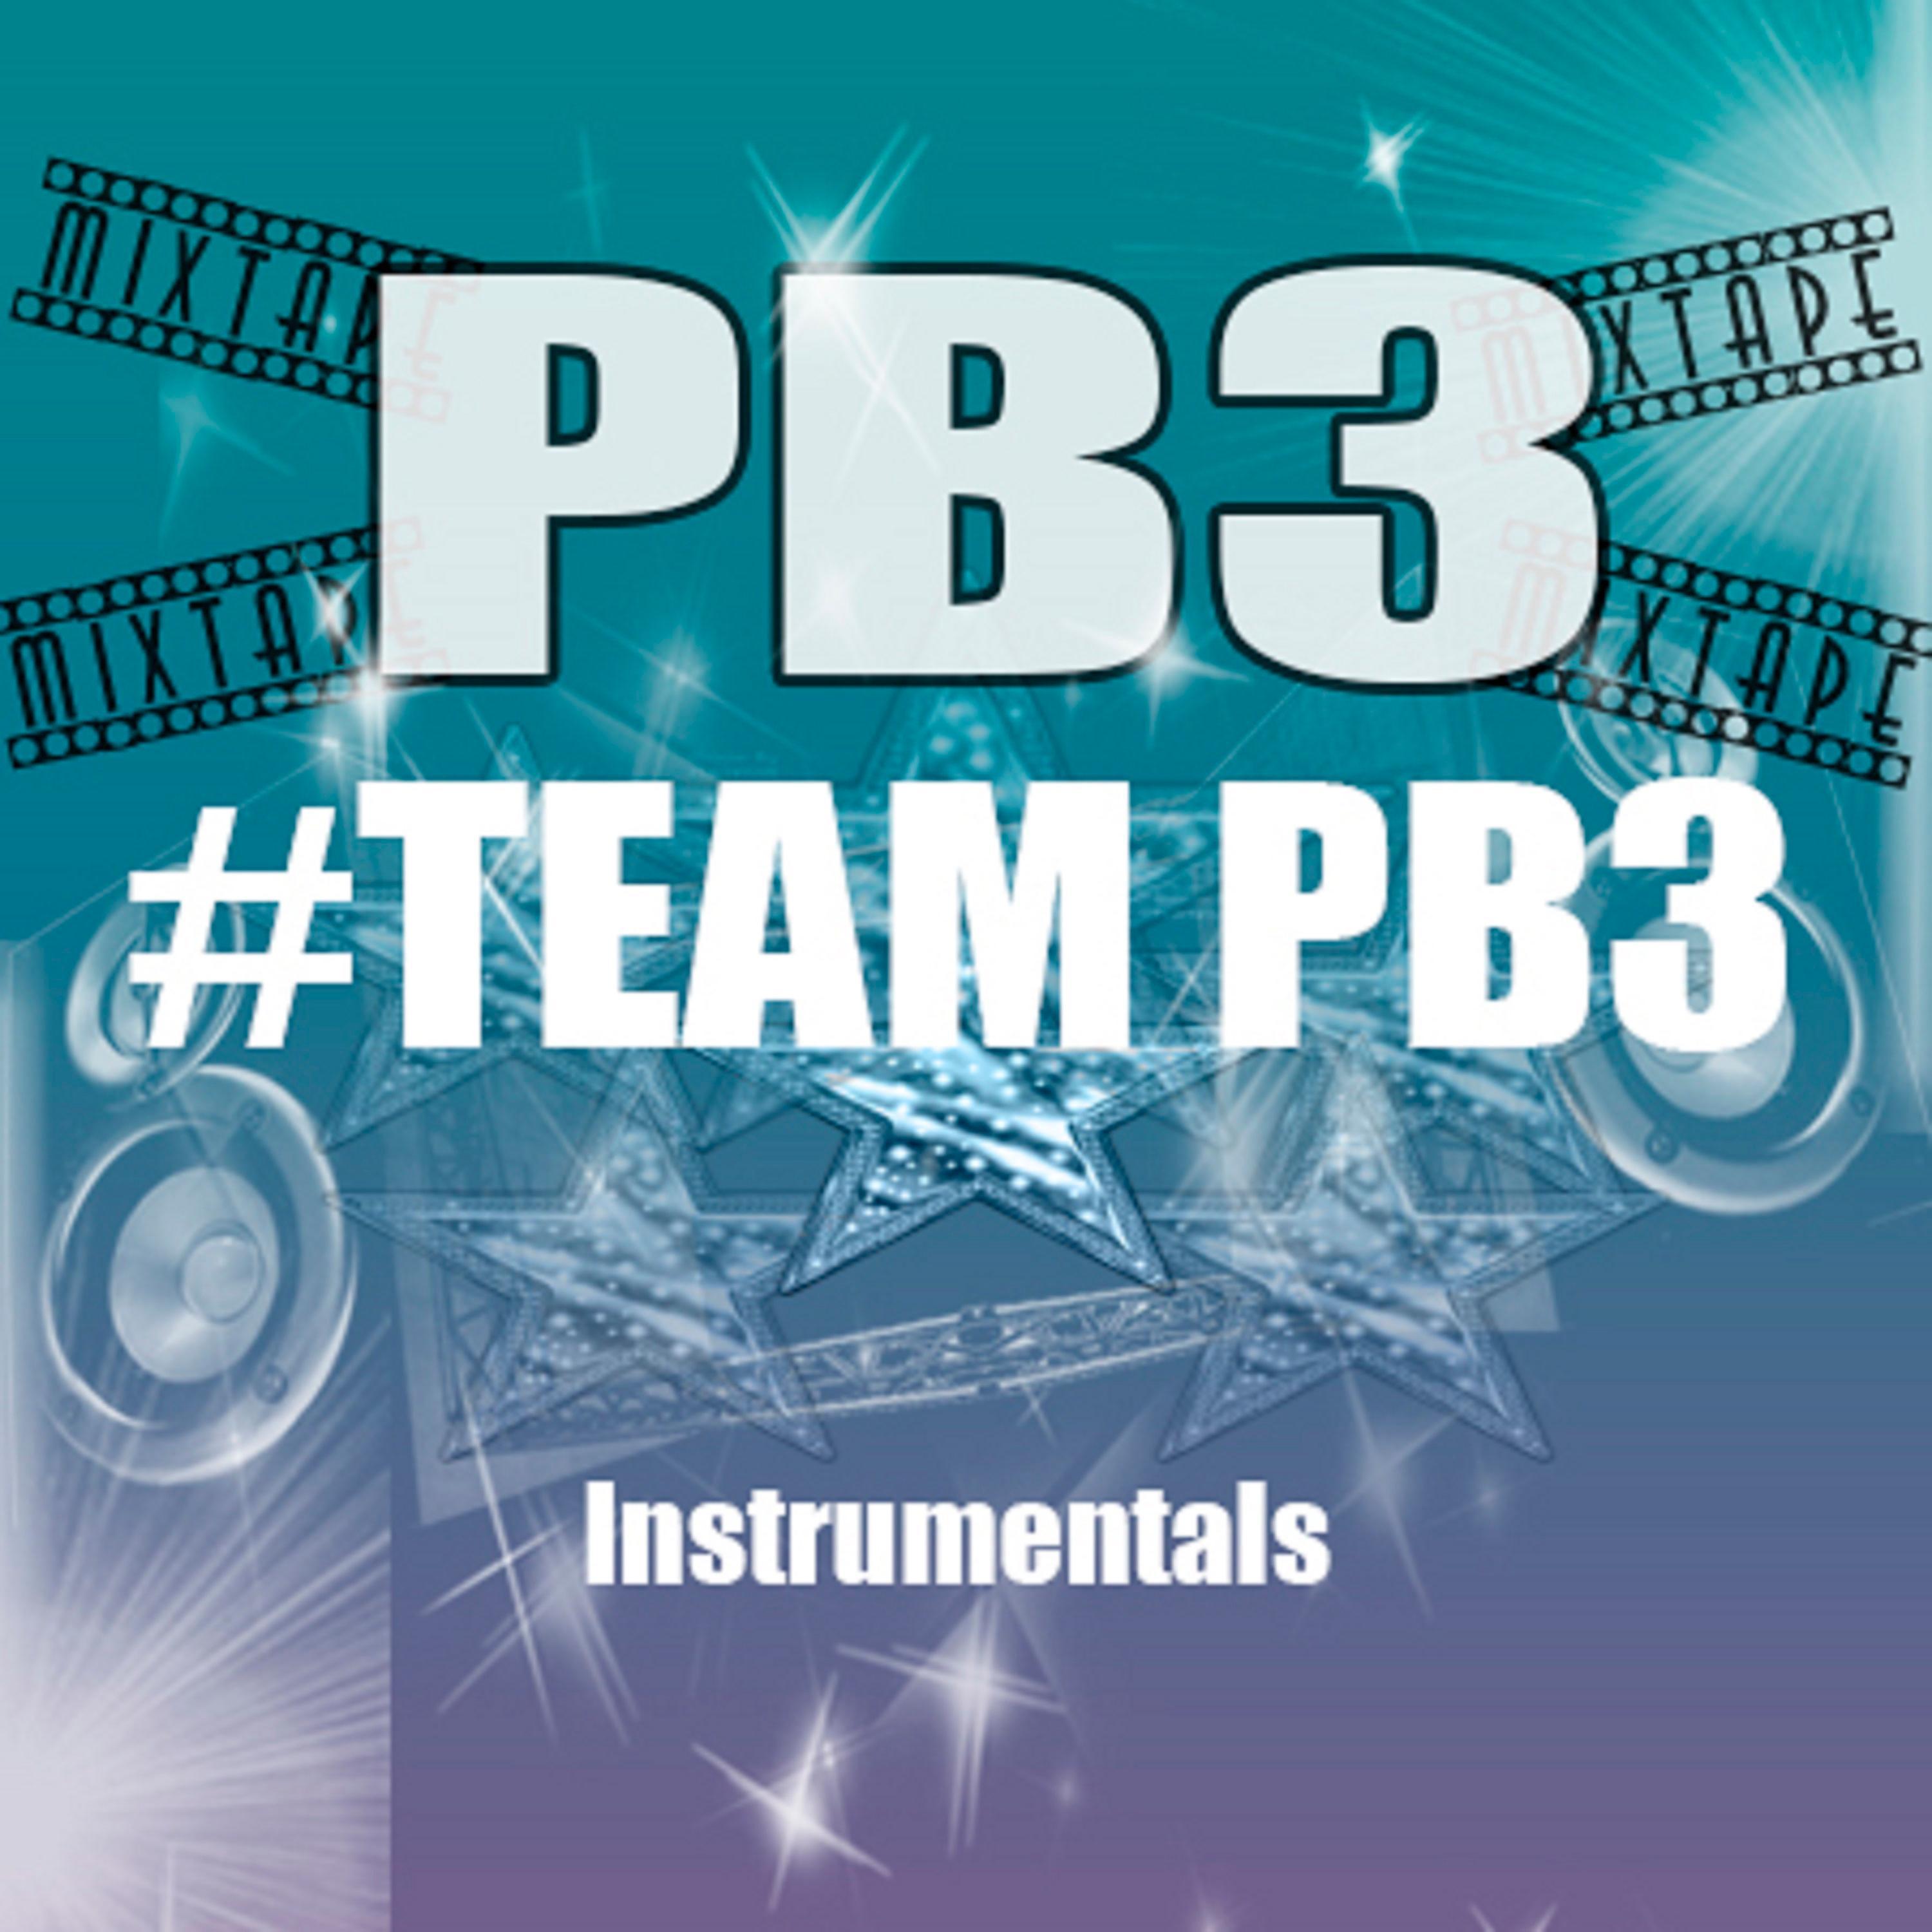 Pb3 the Producer - #TeamPb3